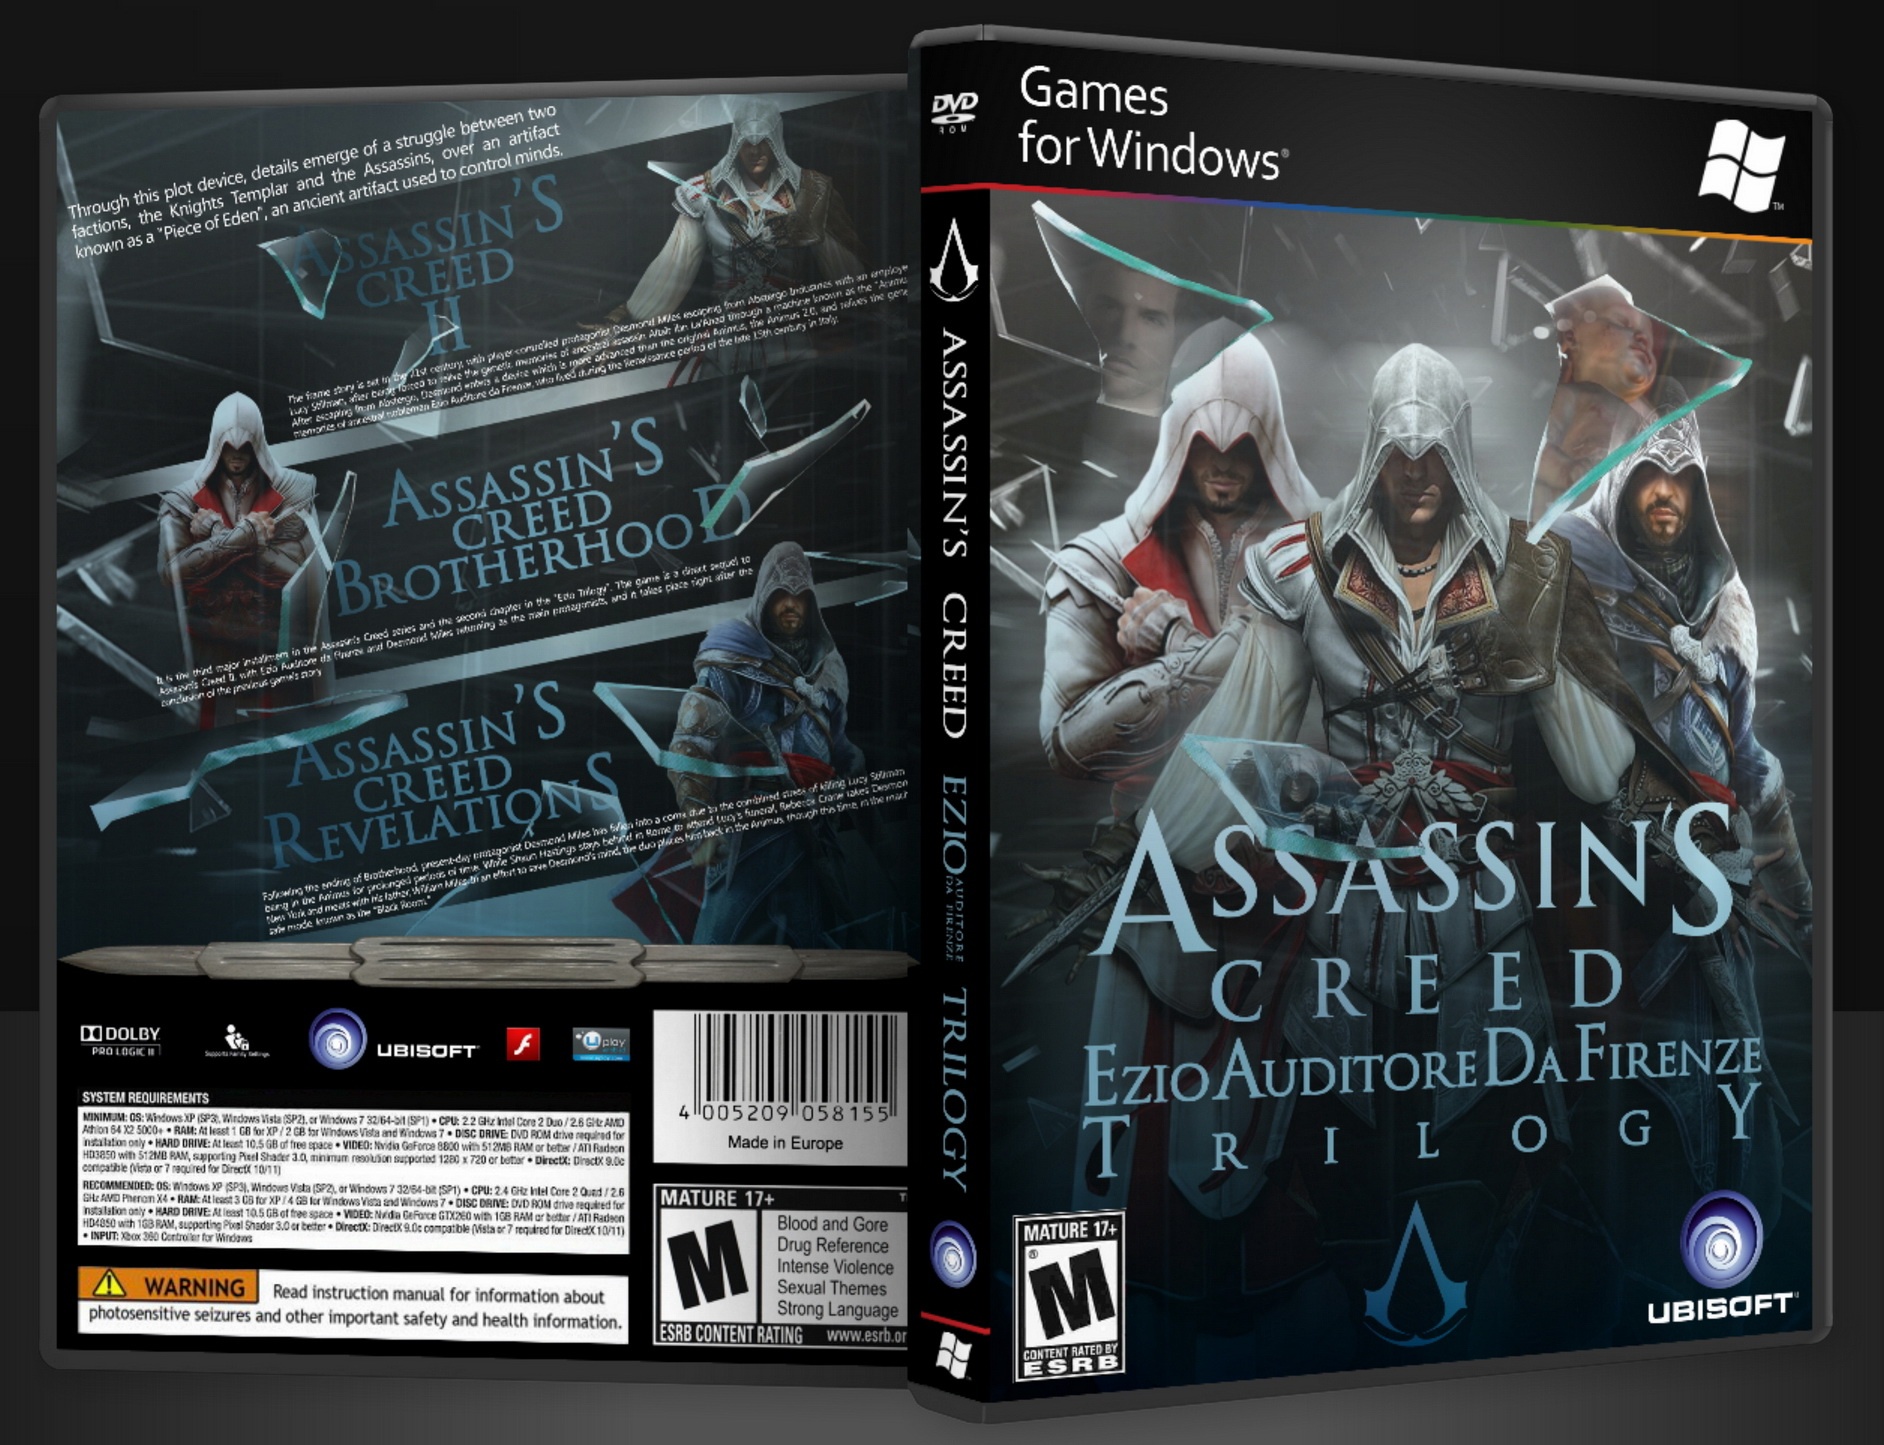 Assassin's Creed: Ezio Auditore Trilogy box cover